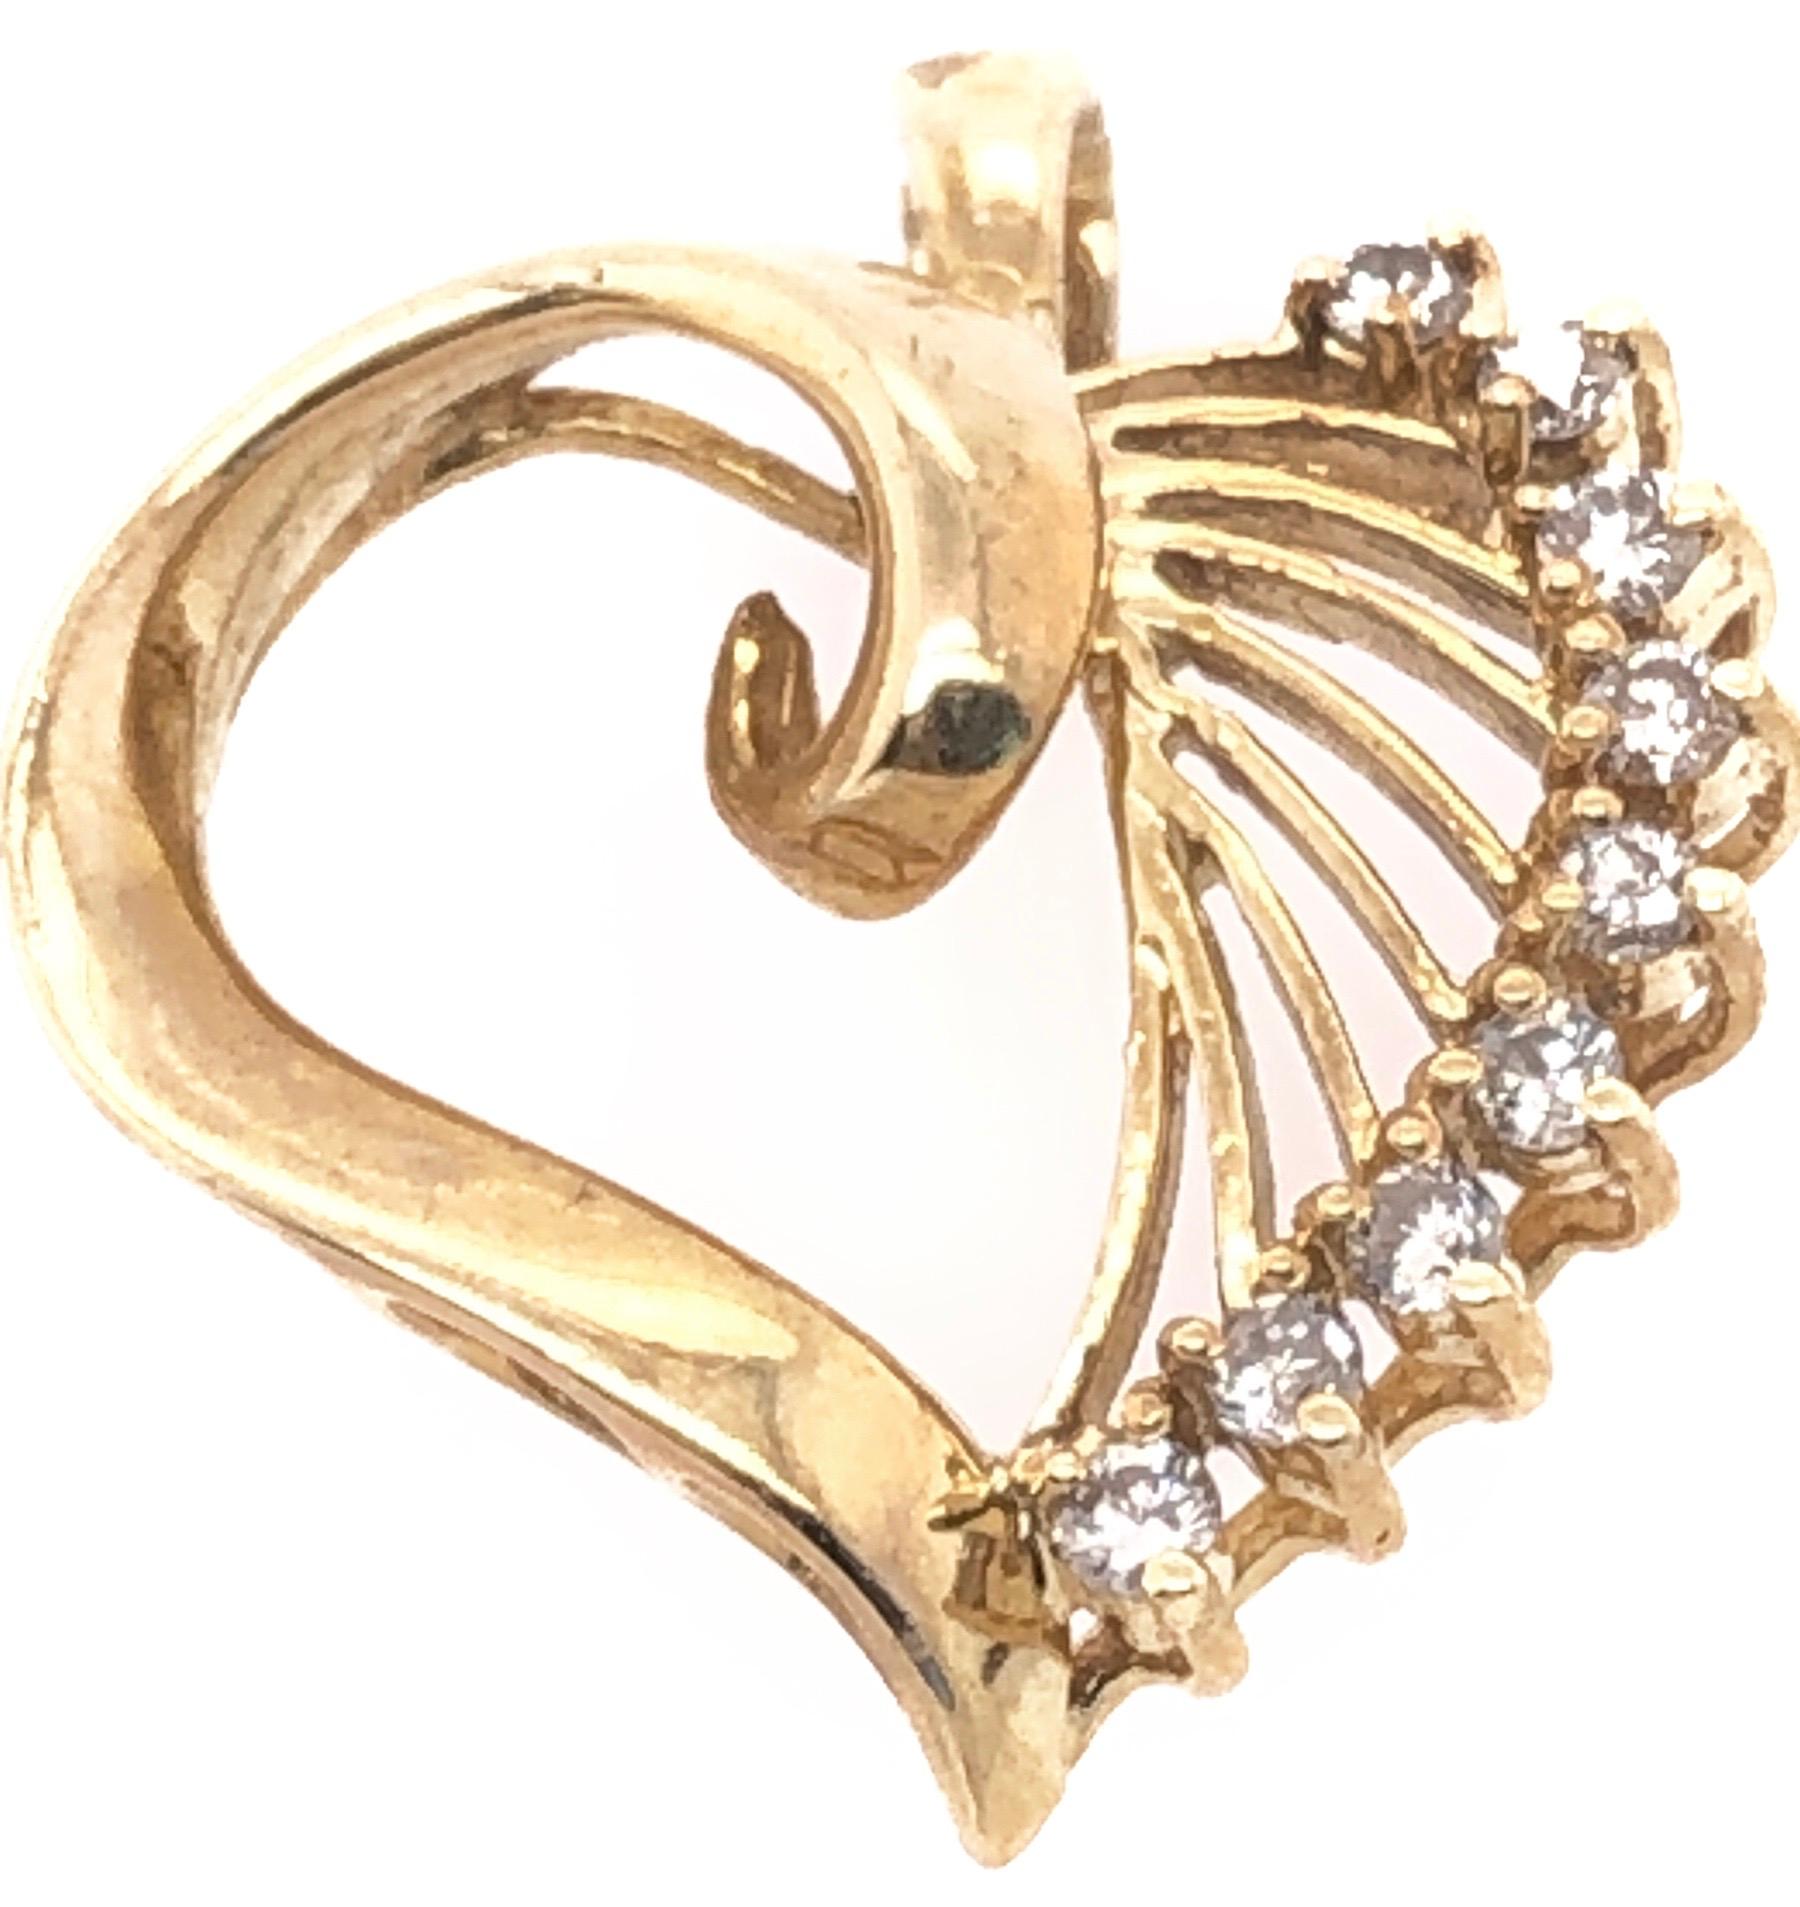 14 Karat Yellow Gold Heart Pendant with Round Diamonds.
0.27 total diamond weight.
3.12 grams total weight.